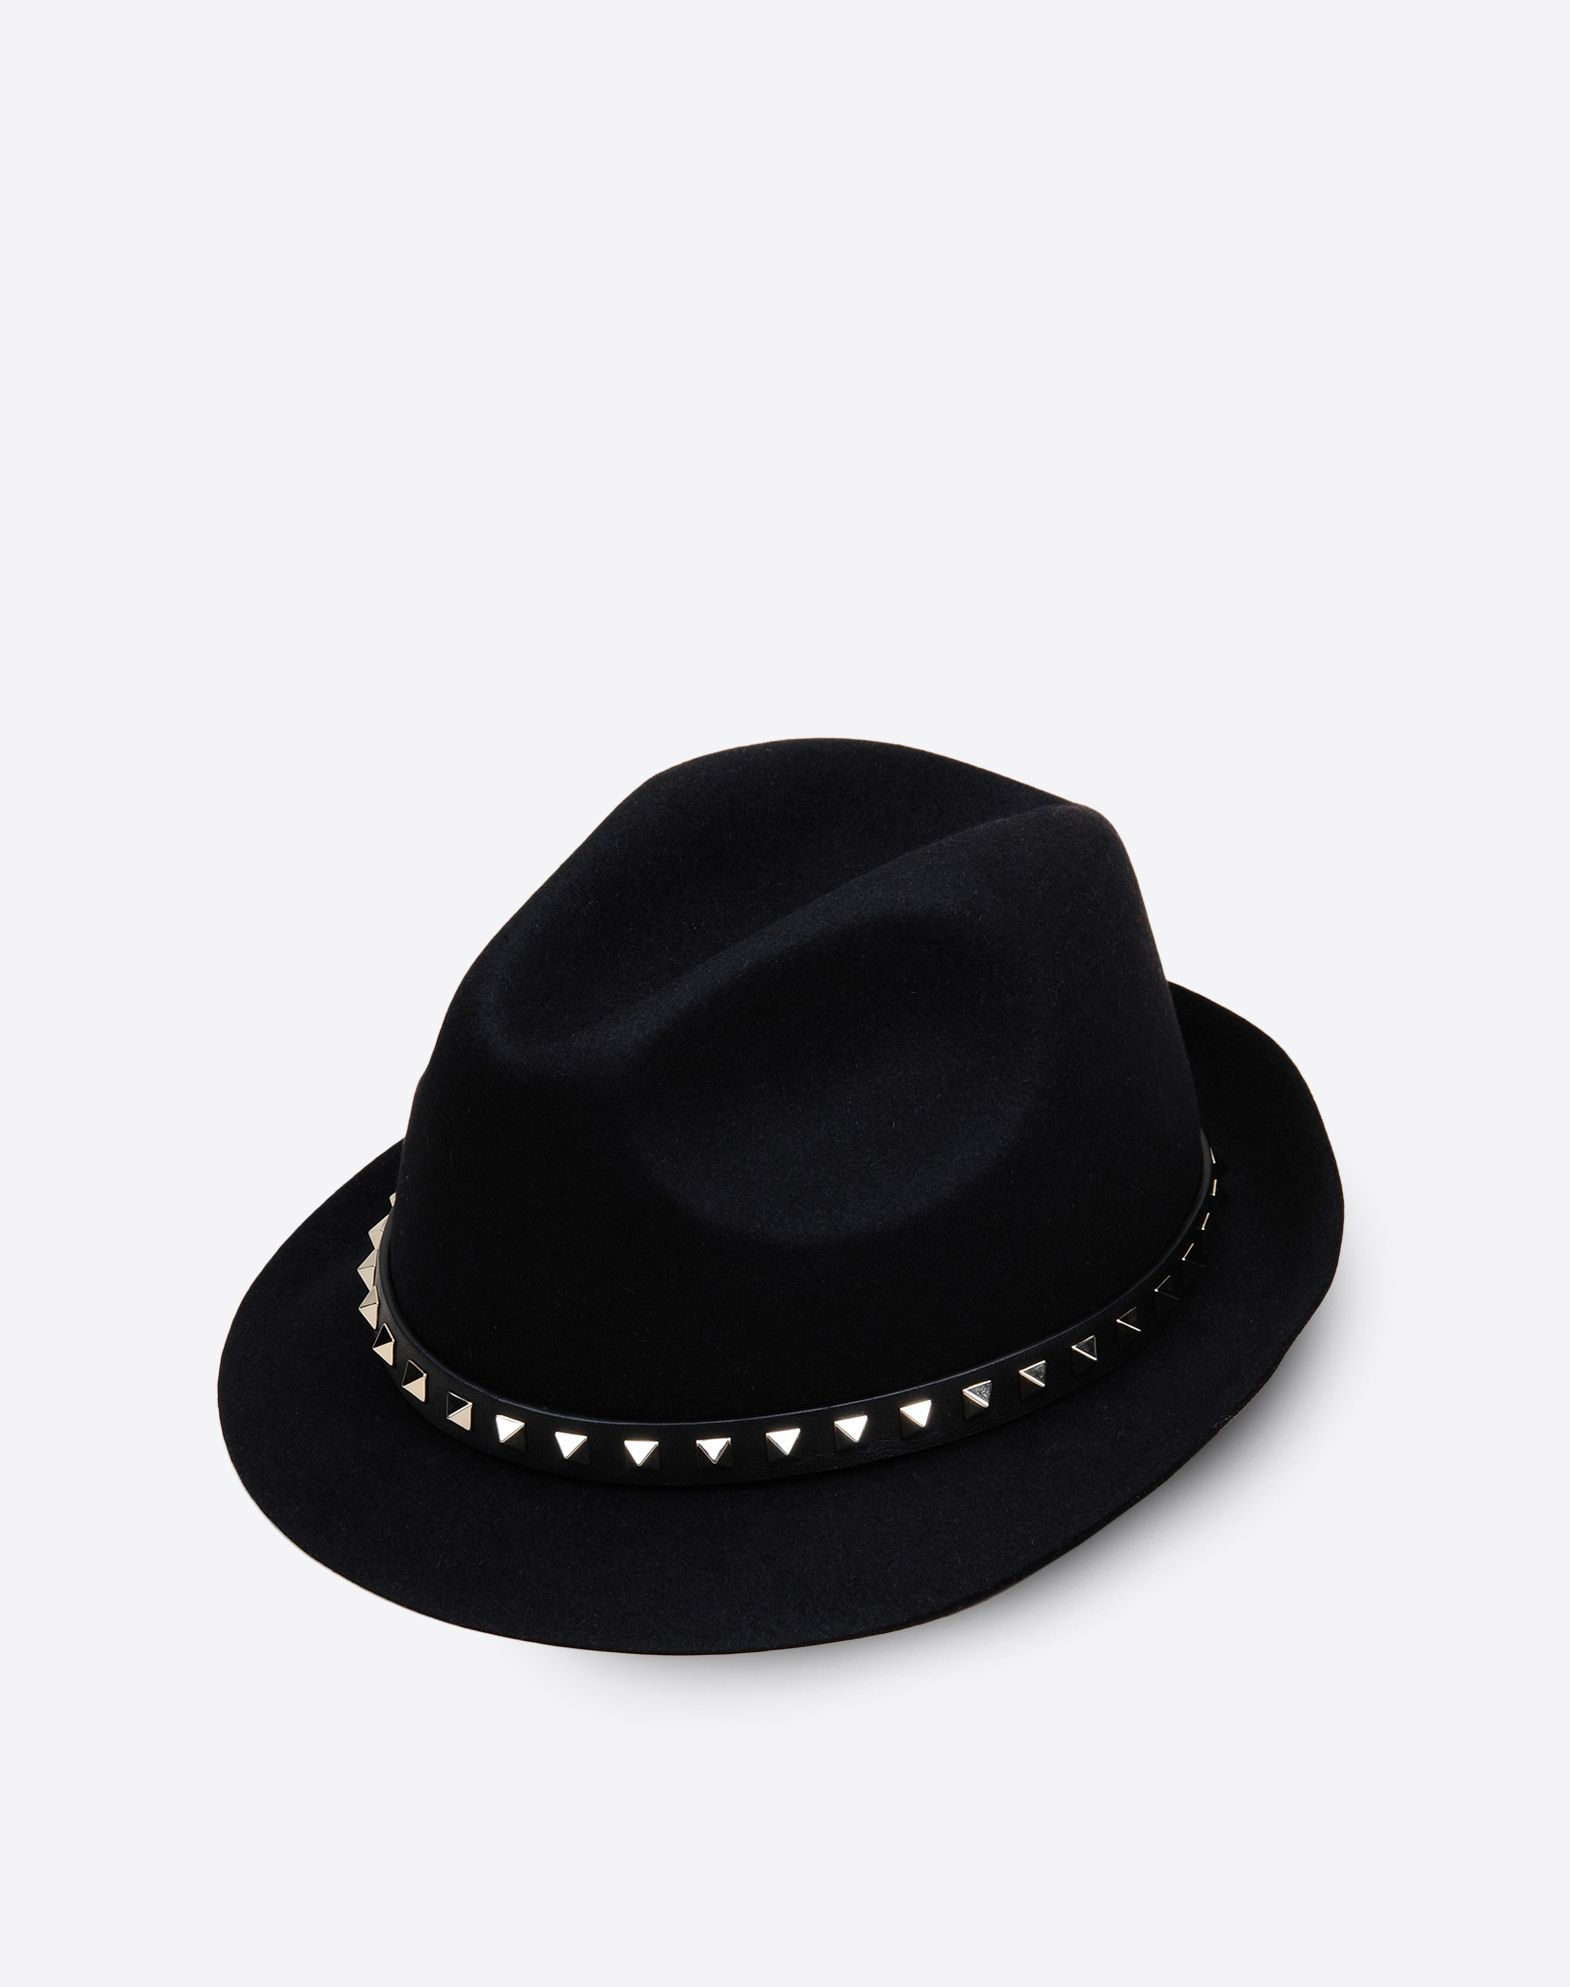 Valentino Garavani Rockstud Trilby Hat, Hats for Women - Valentino ...